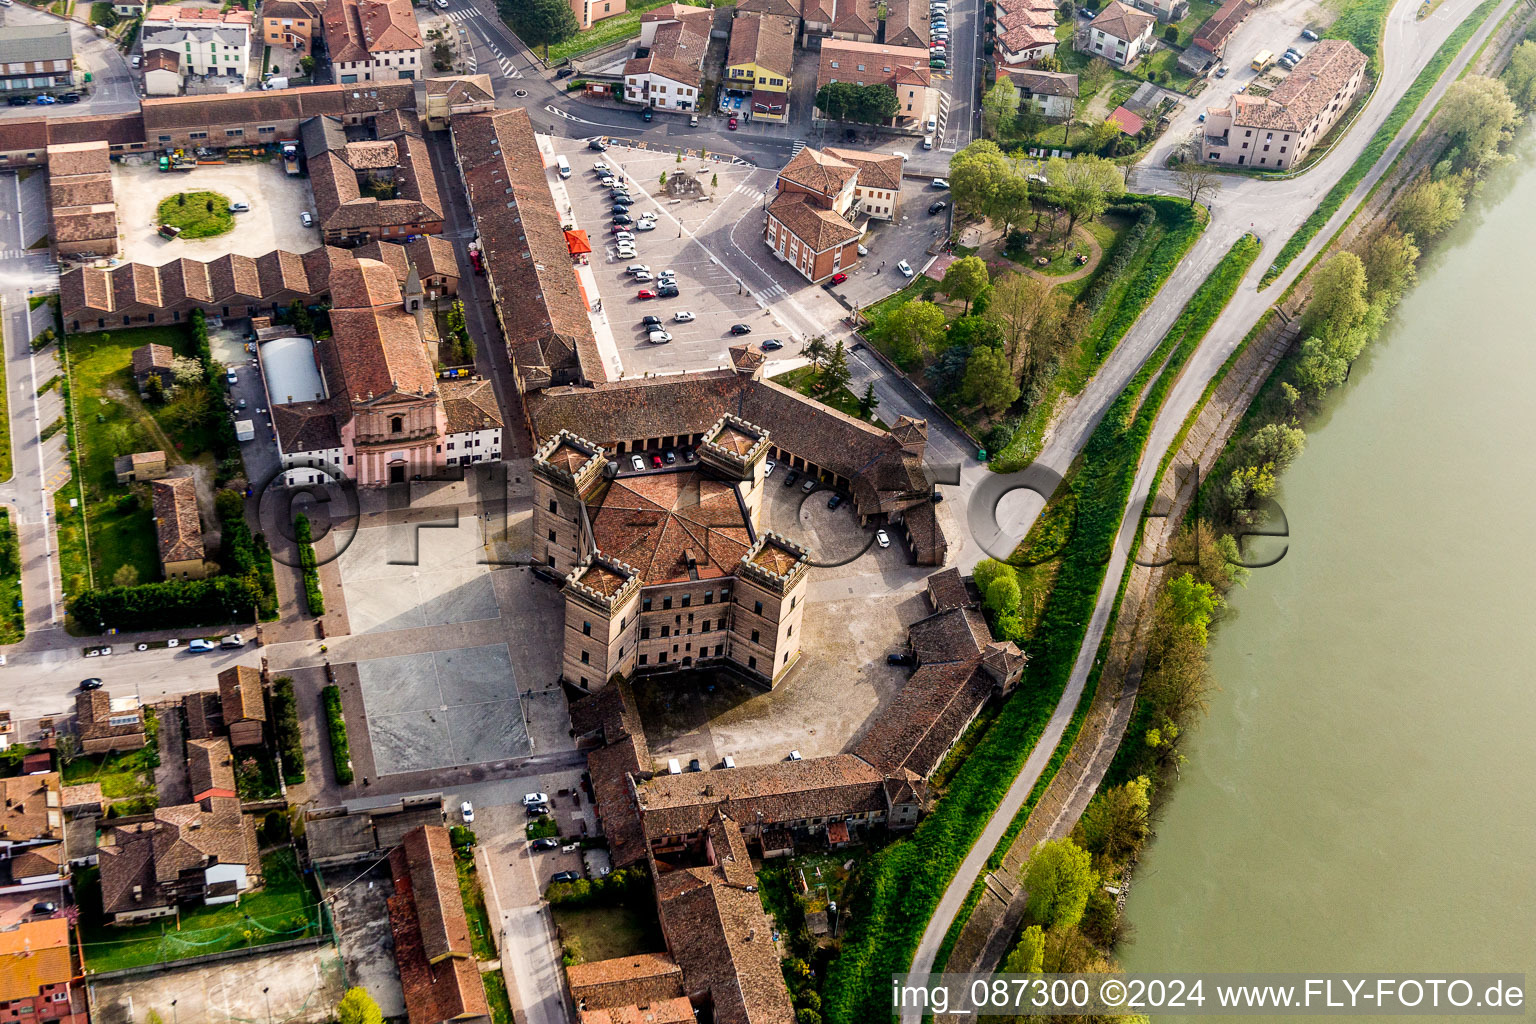 Luftbild von Vier Schloßtürme des Schloß Castle of Robinie / Castello di Mesola - Delizia Estense am Ufer des Po in Mesola in Emilia-Romagna, Italien